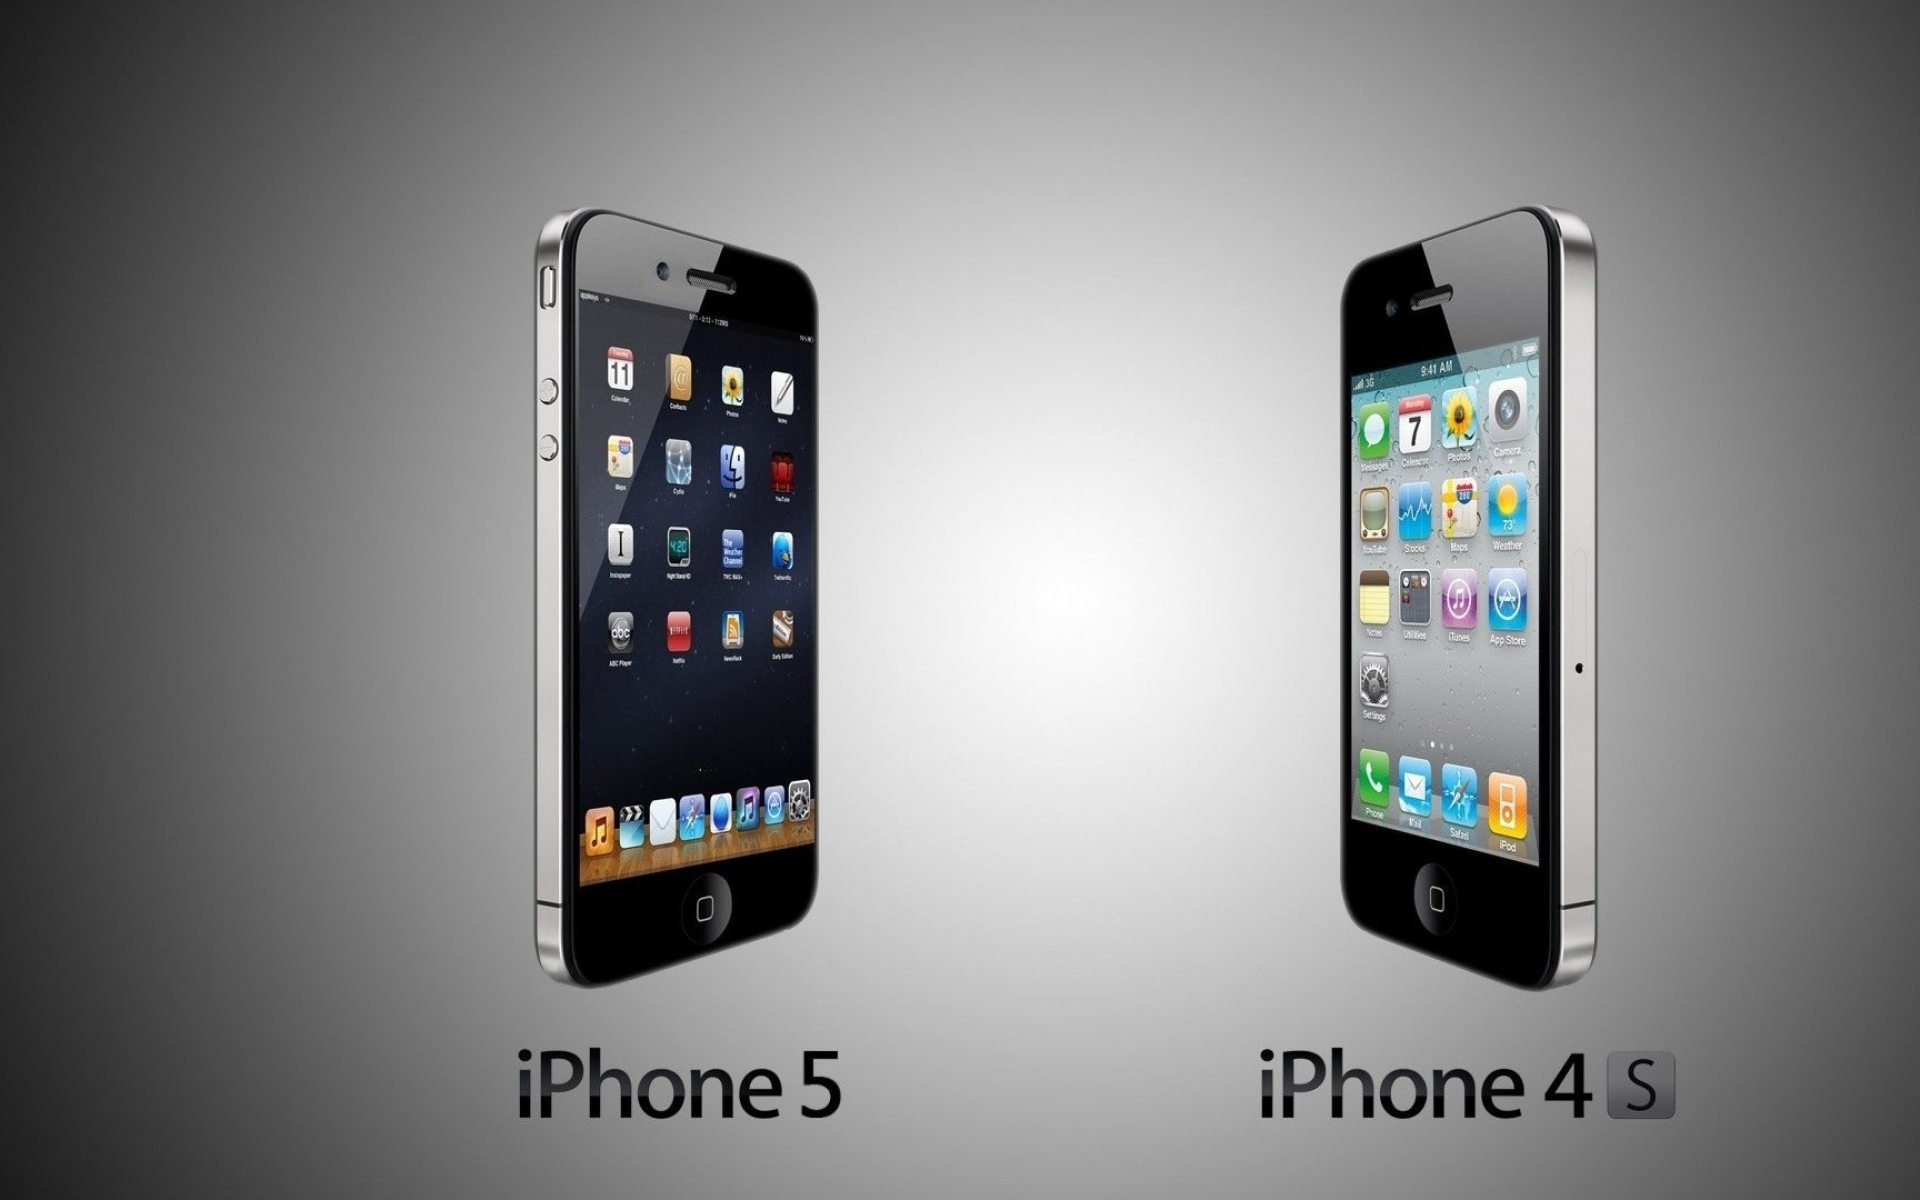 Картинки iphone 5 против iPhone 4s, Iphone, технологии, телефон, гаджет, яблоко фото и обои на рабочий стол